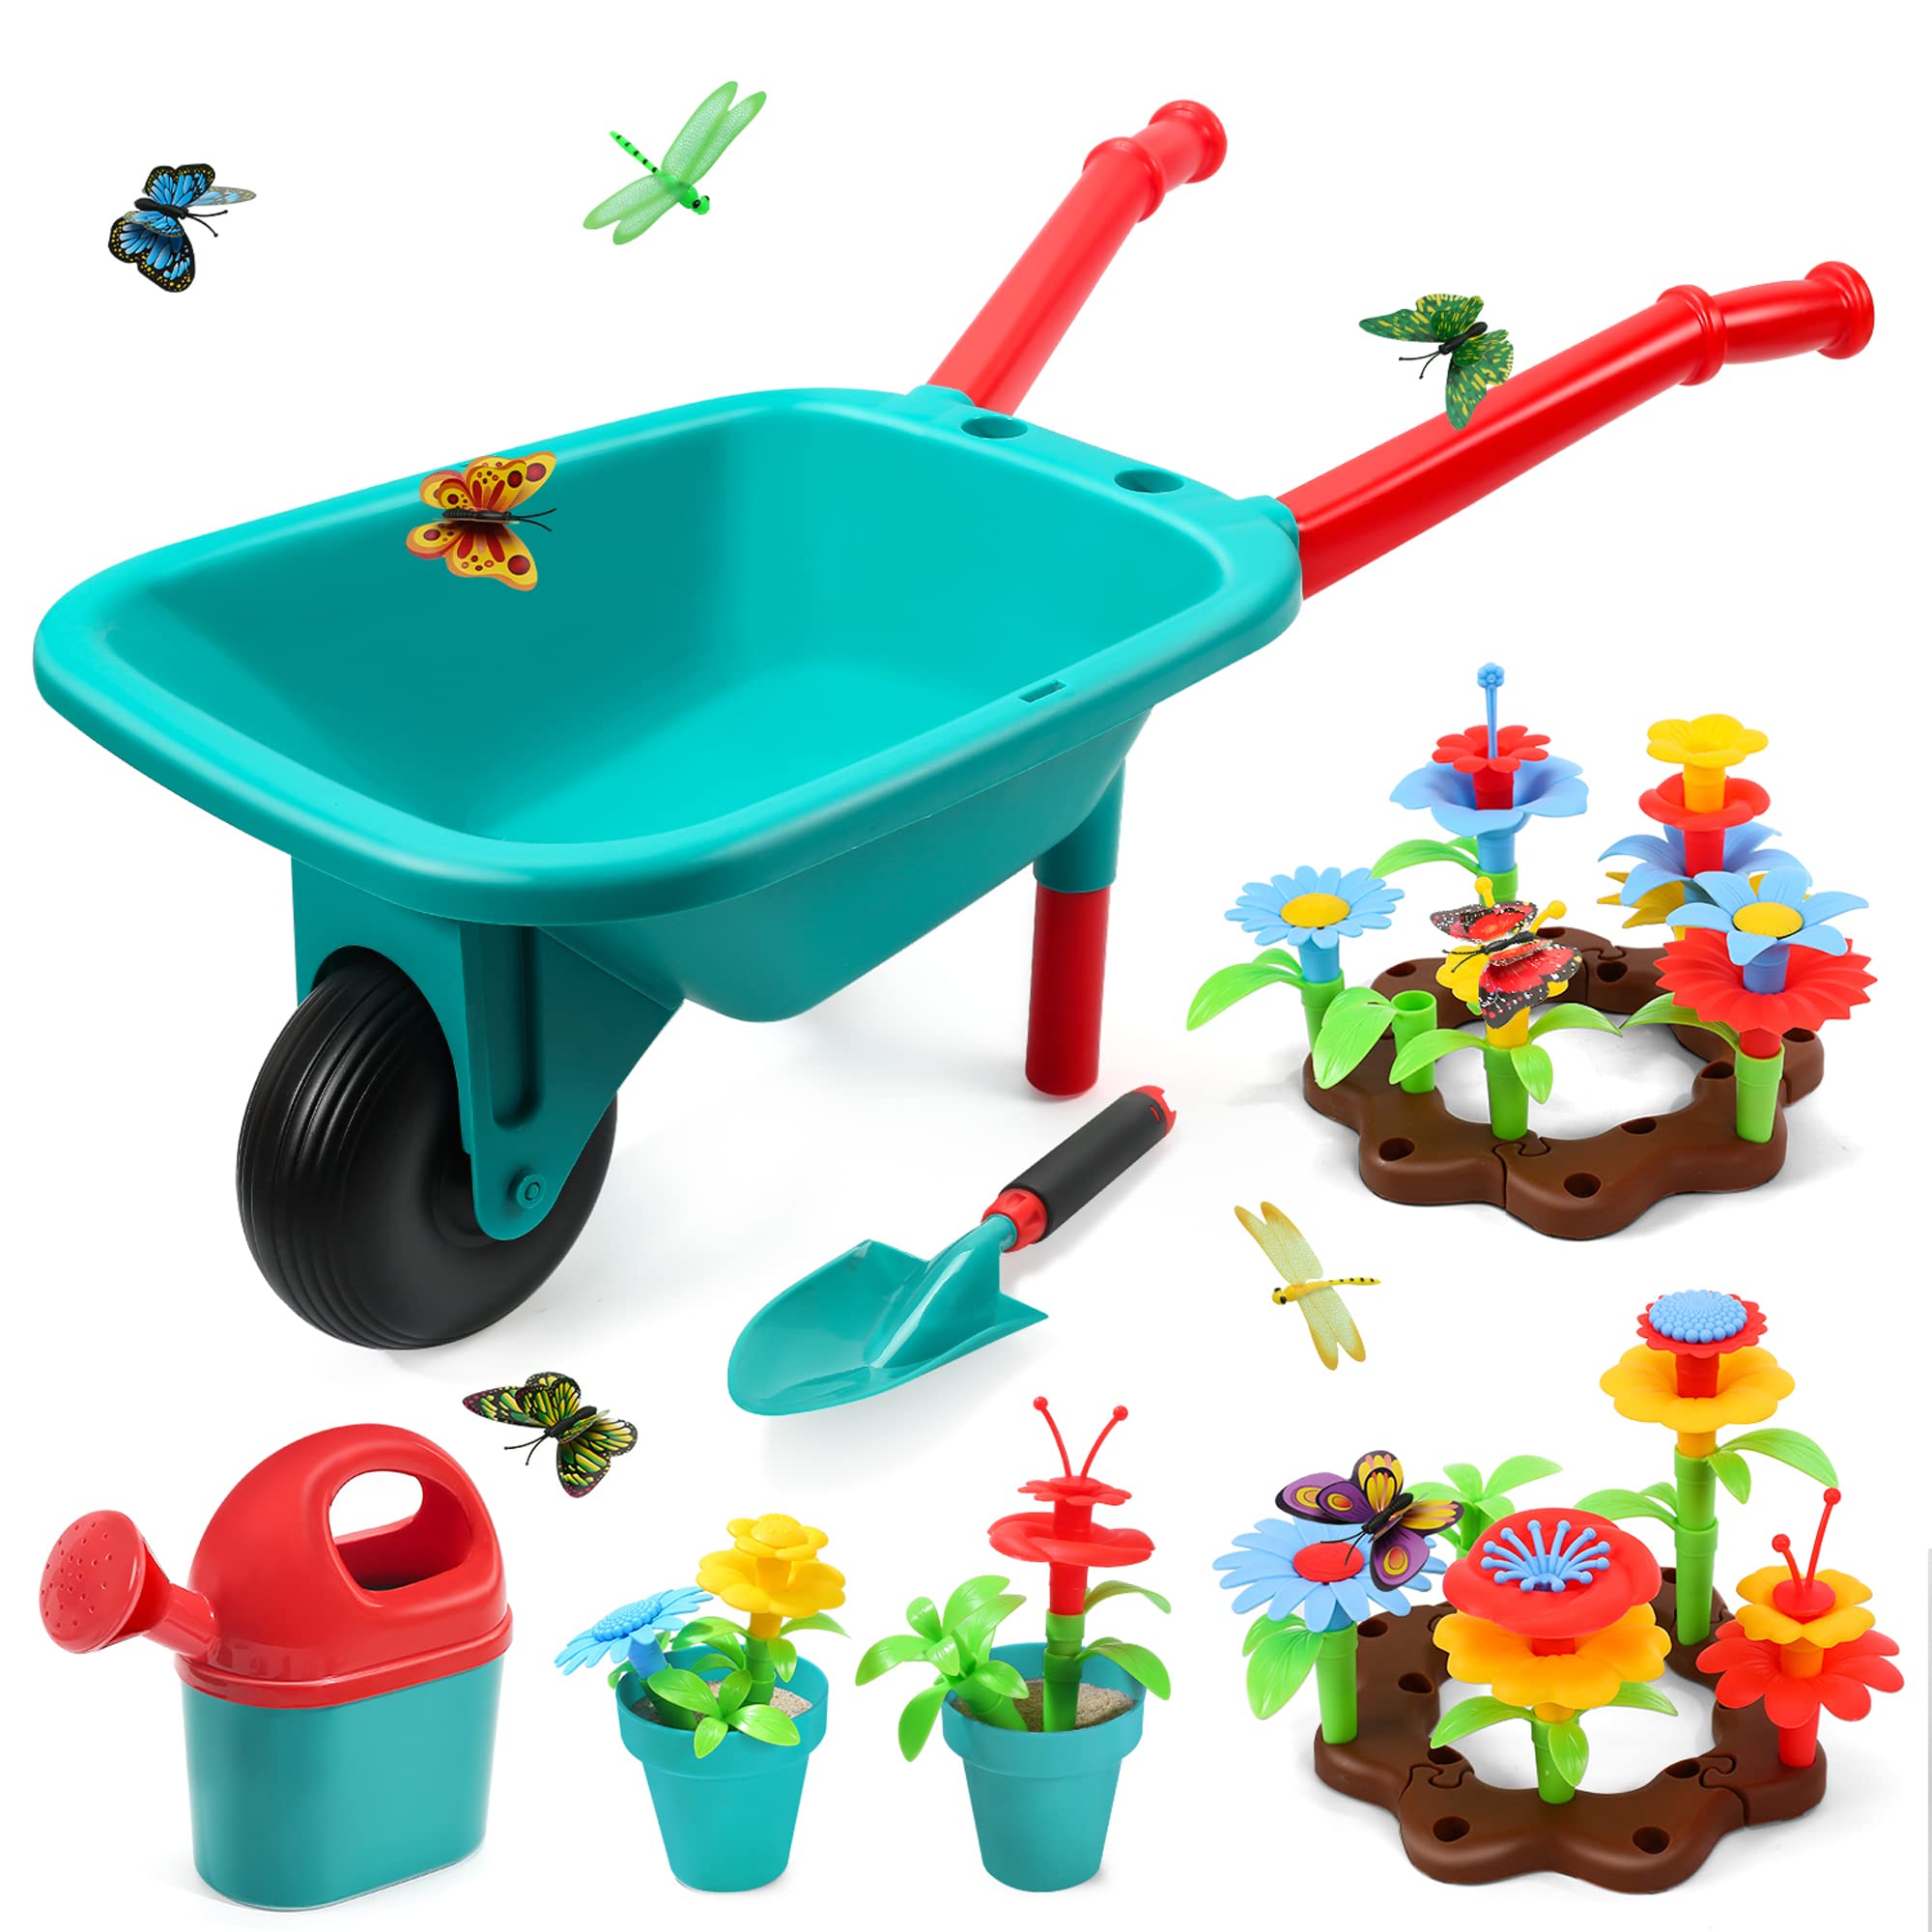 CUTE STONE Kids Gardening Tools Set, Garden Toys with Wheelbarrow, Watering Can, Shovel, Flower Garden Building Toy